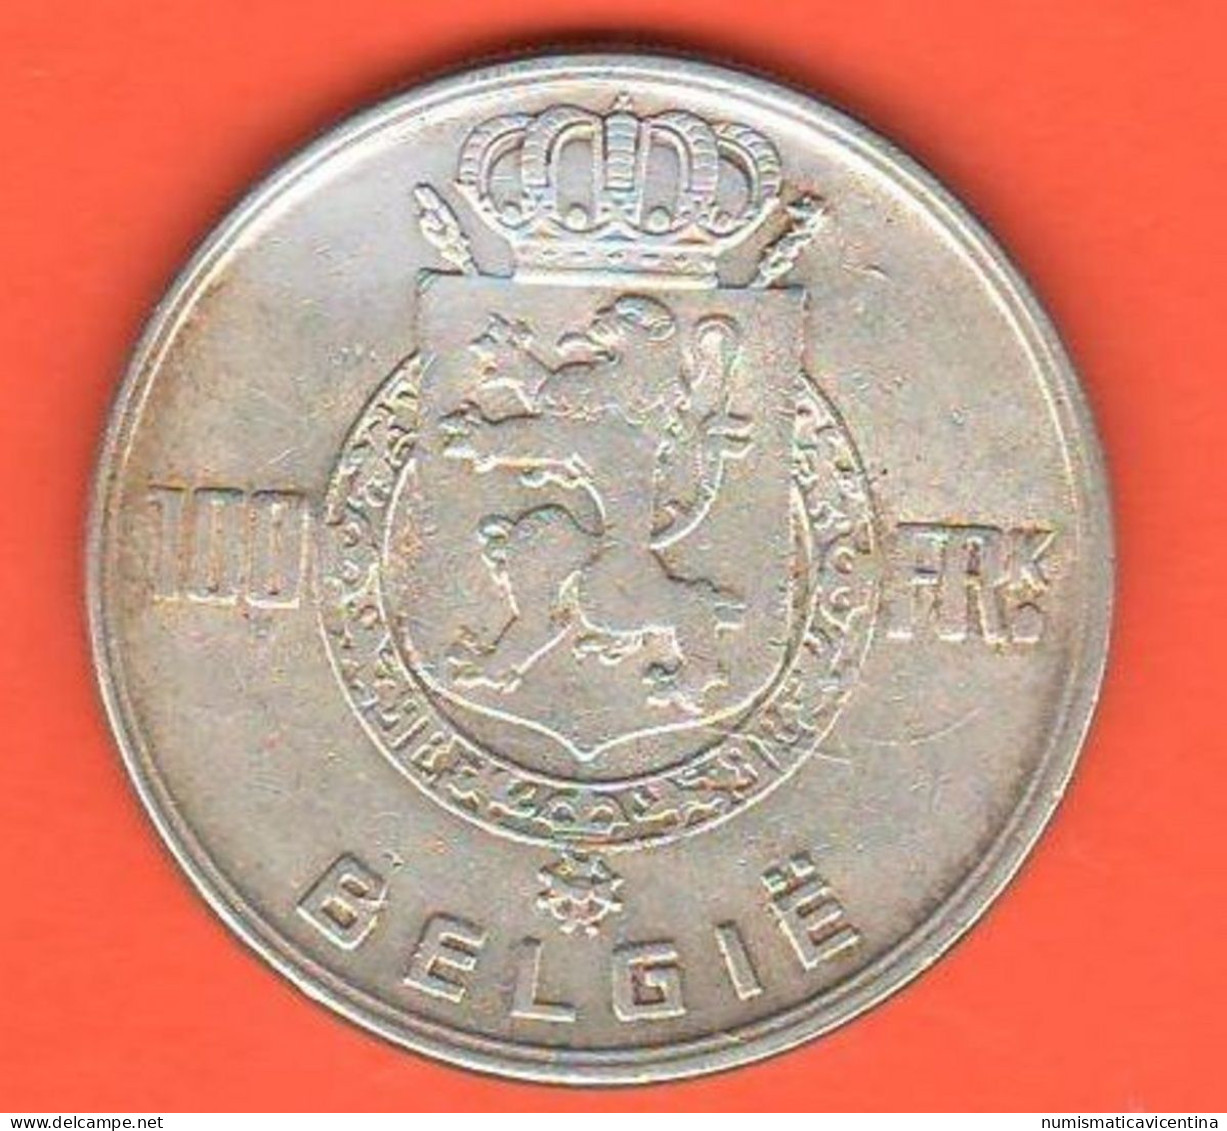 Belgio 100 Francs 1951 Belgium Belgique België Silver Coin - 100 Franc